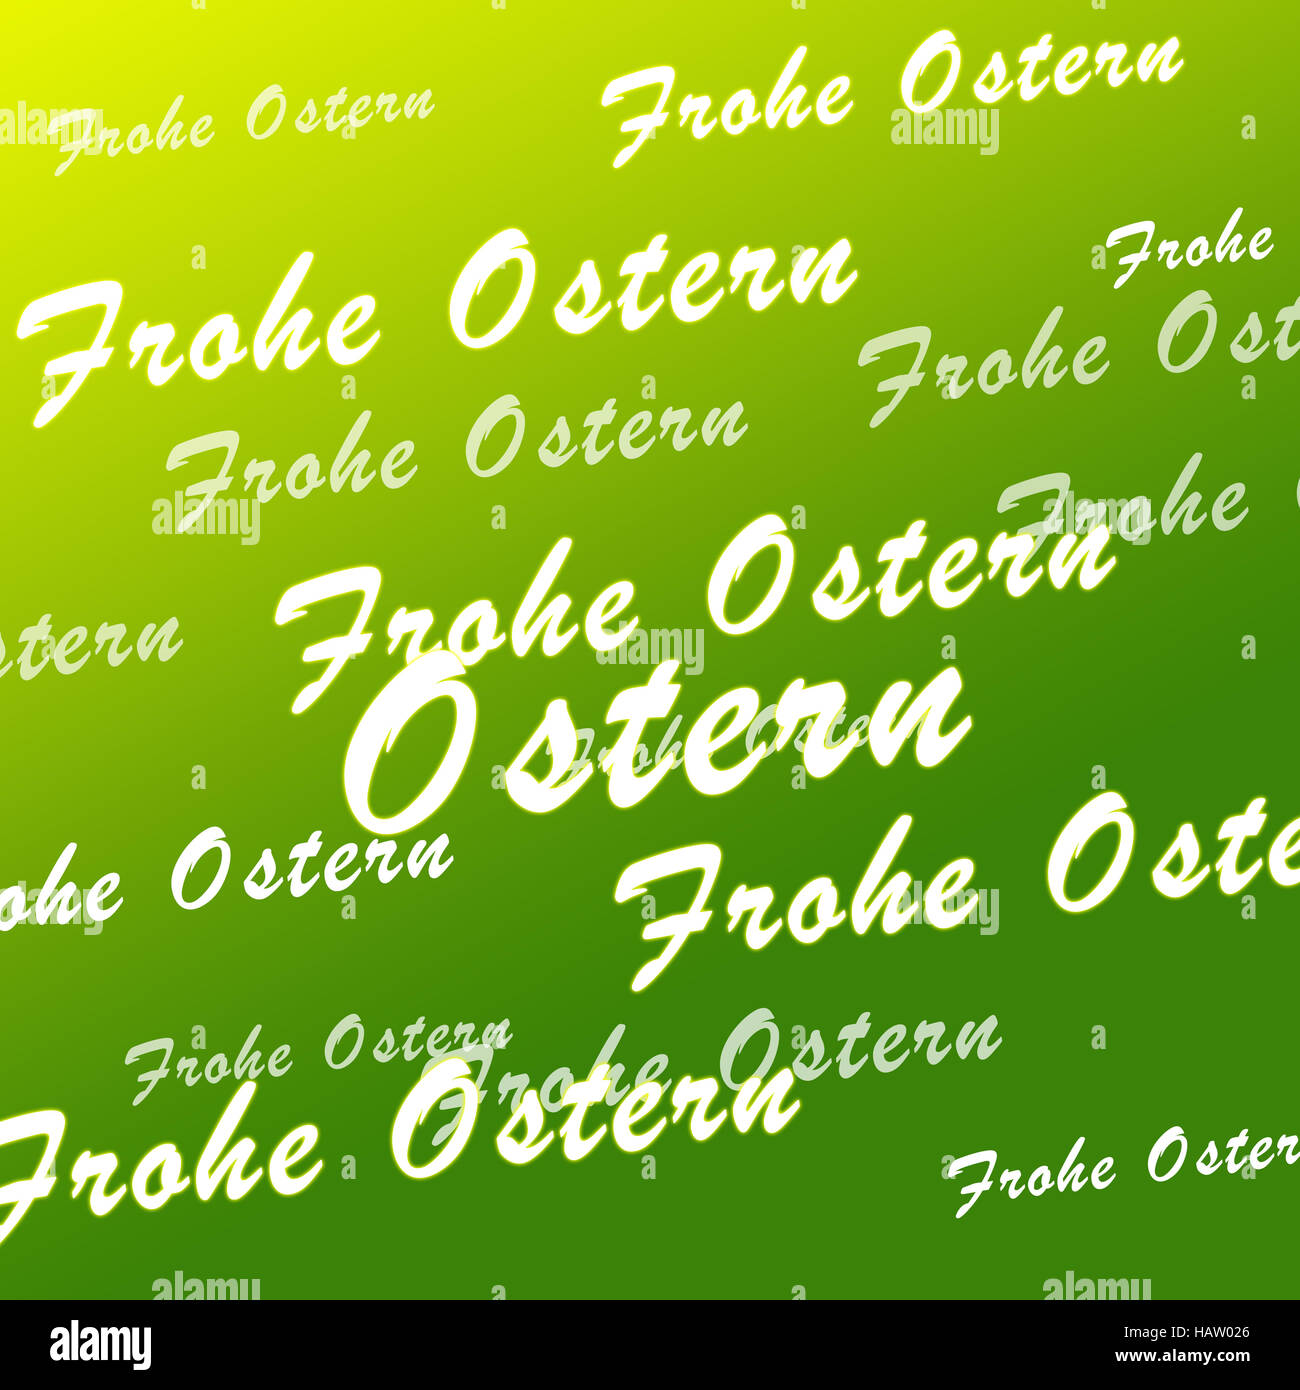 Frohe Ostern grün Stock Photo